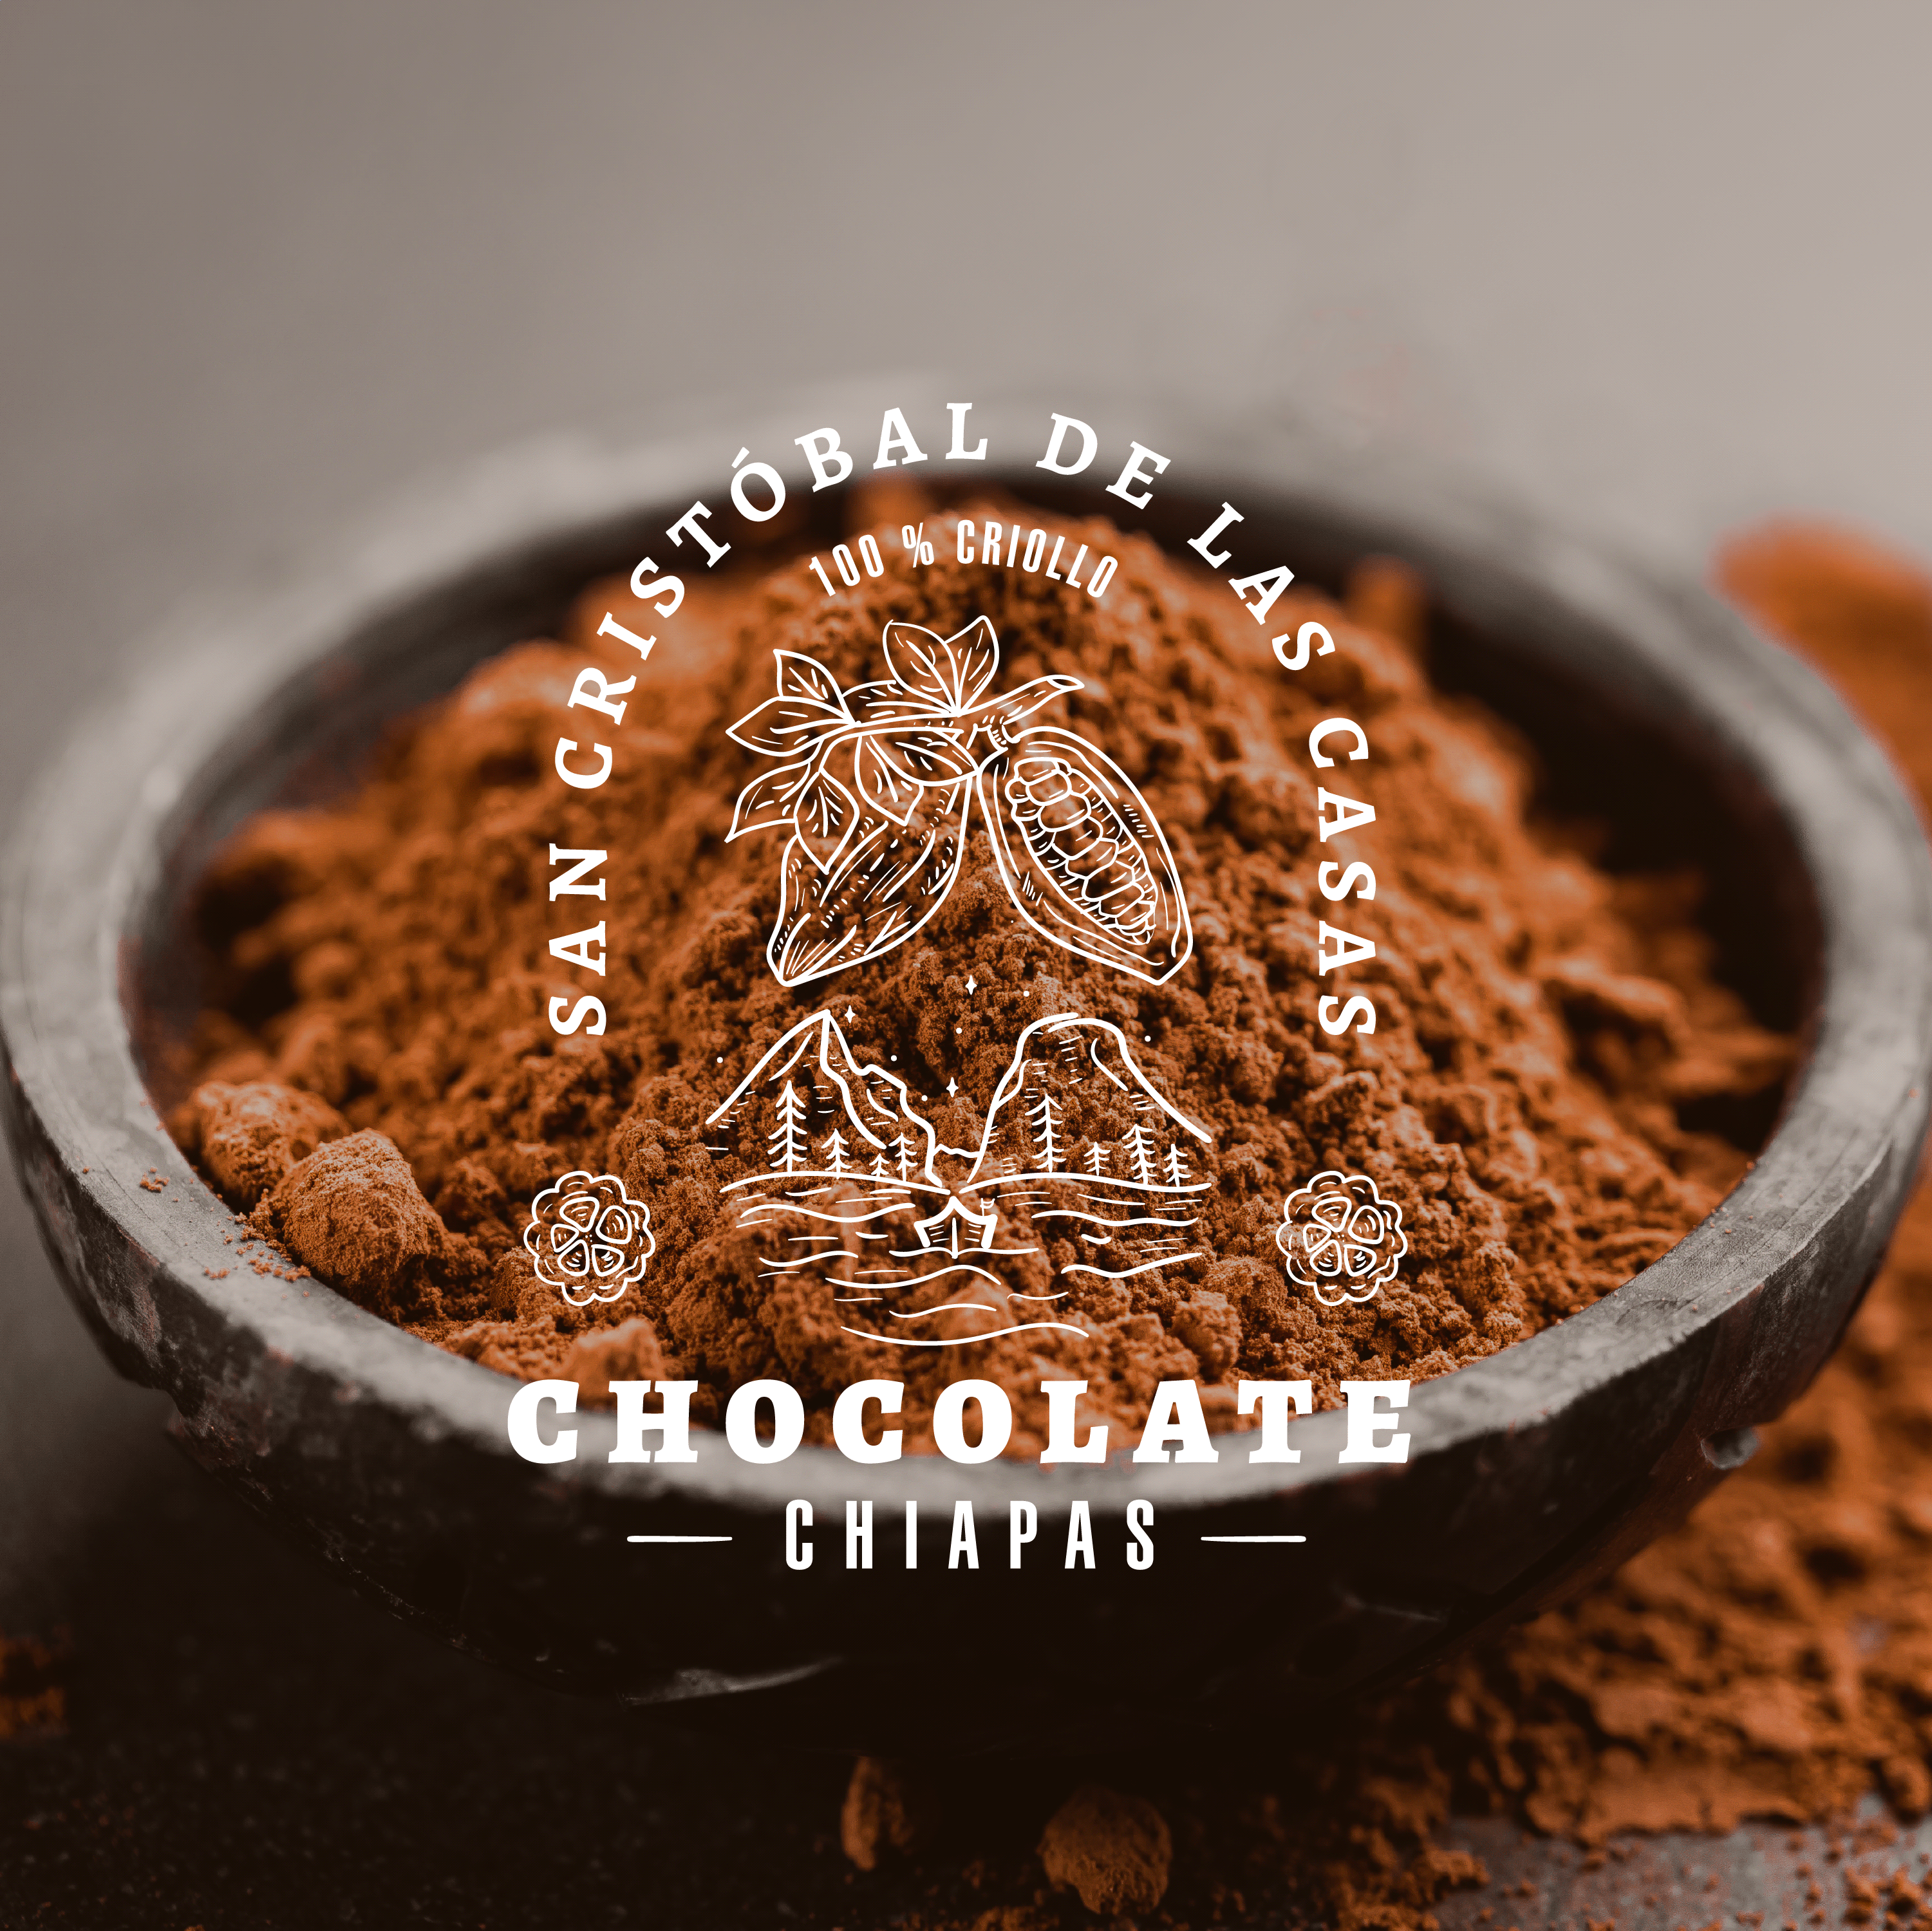 Chocolate Chiapaneco Artesanal - GAS UP! MASTER COFFEE